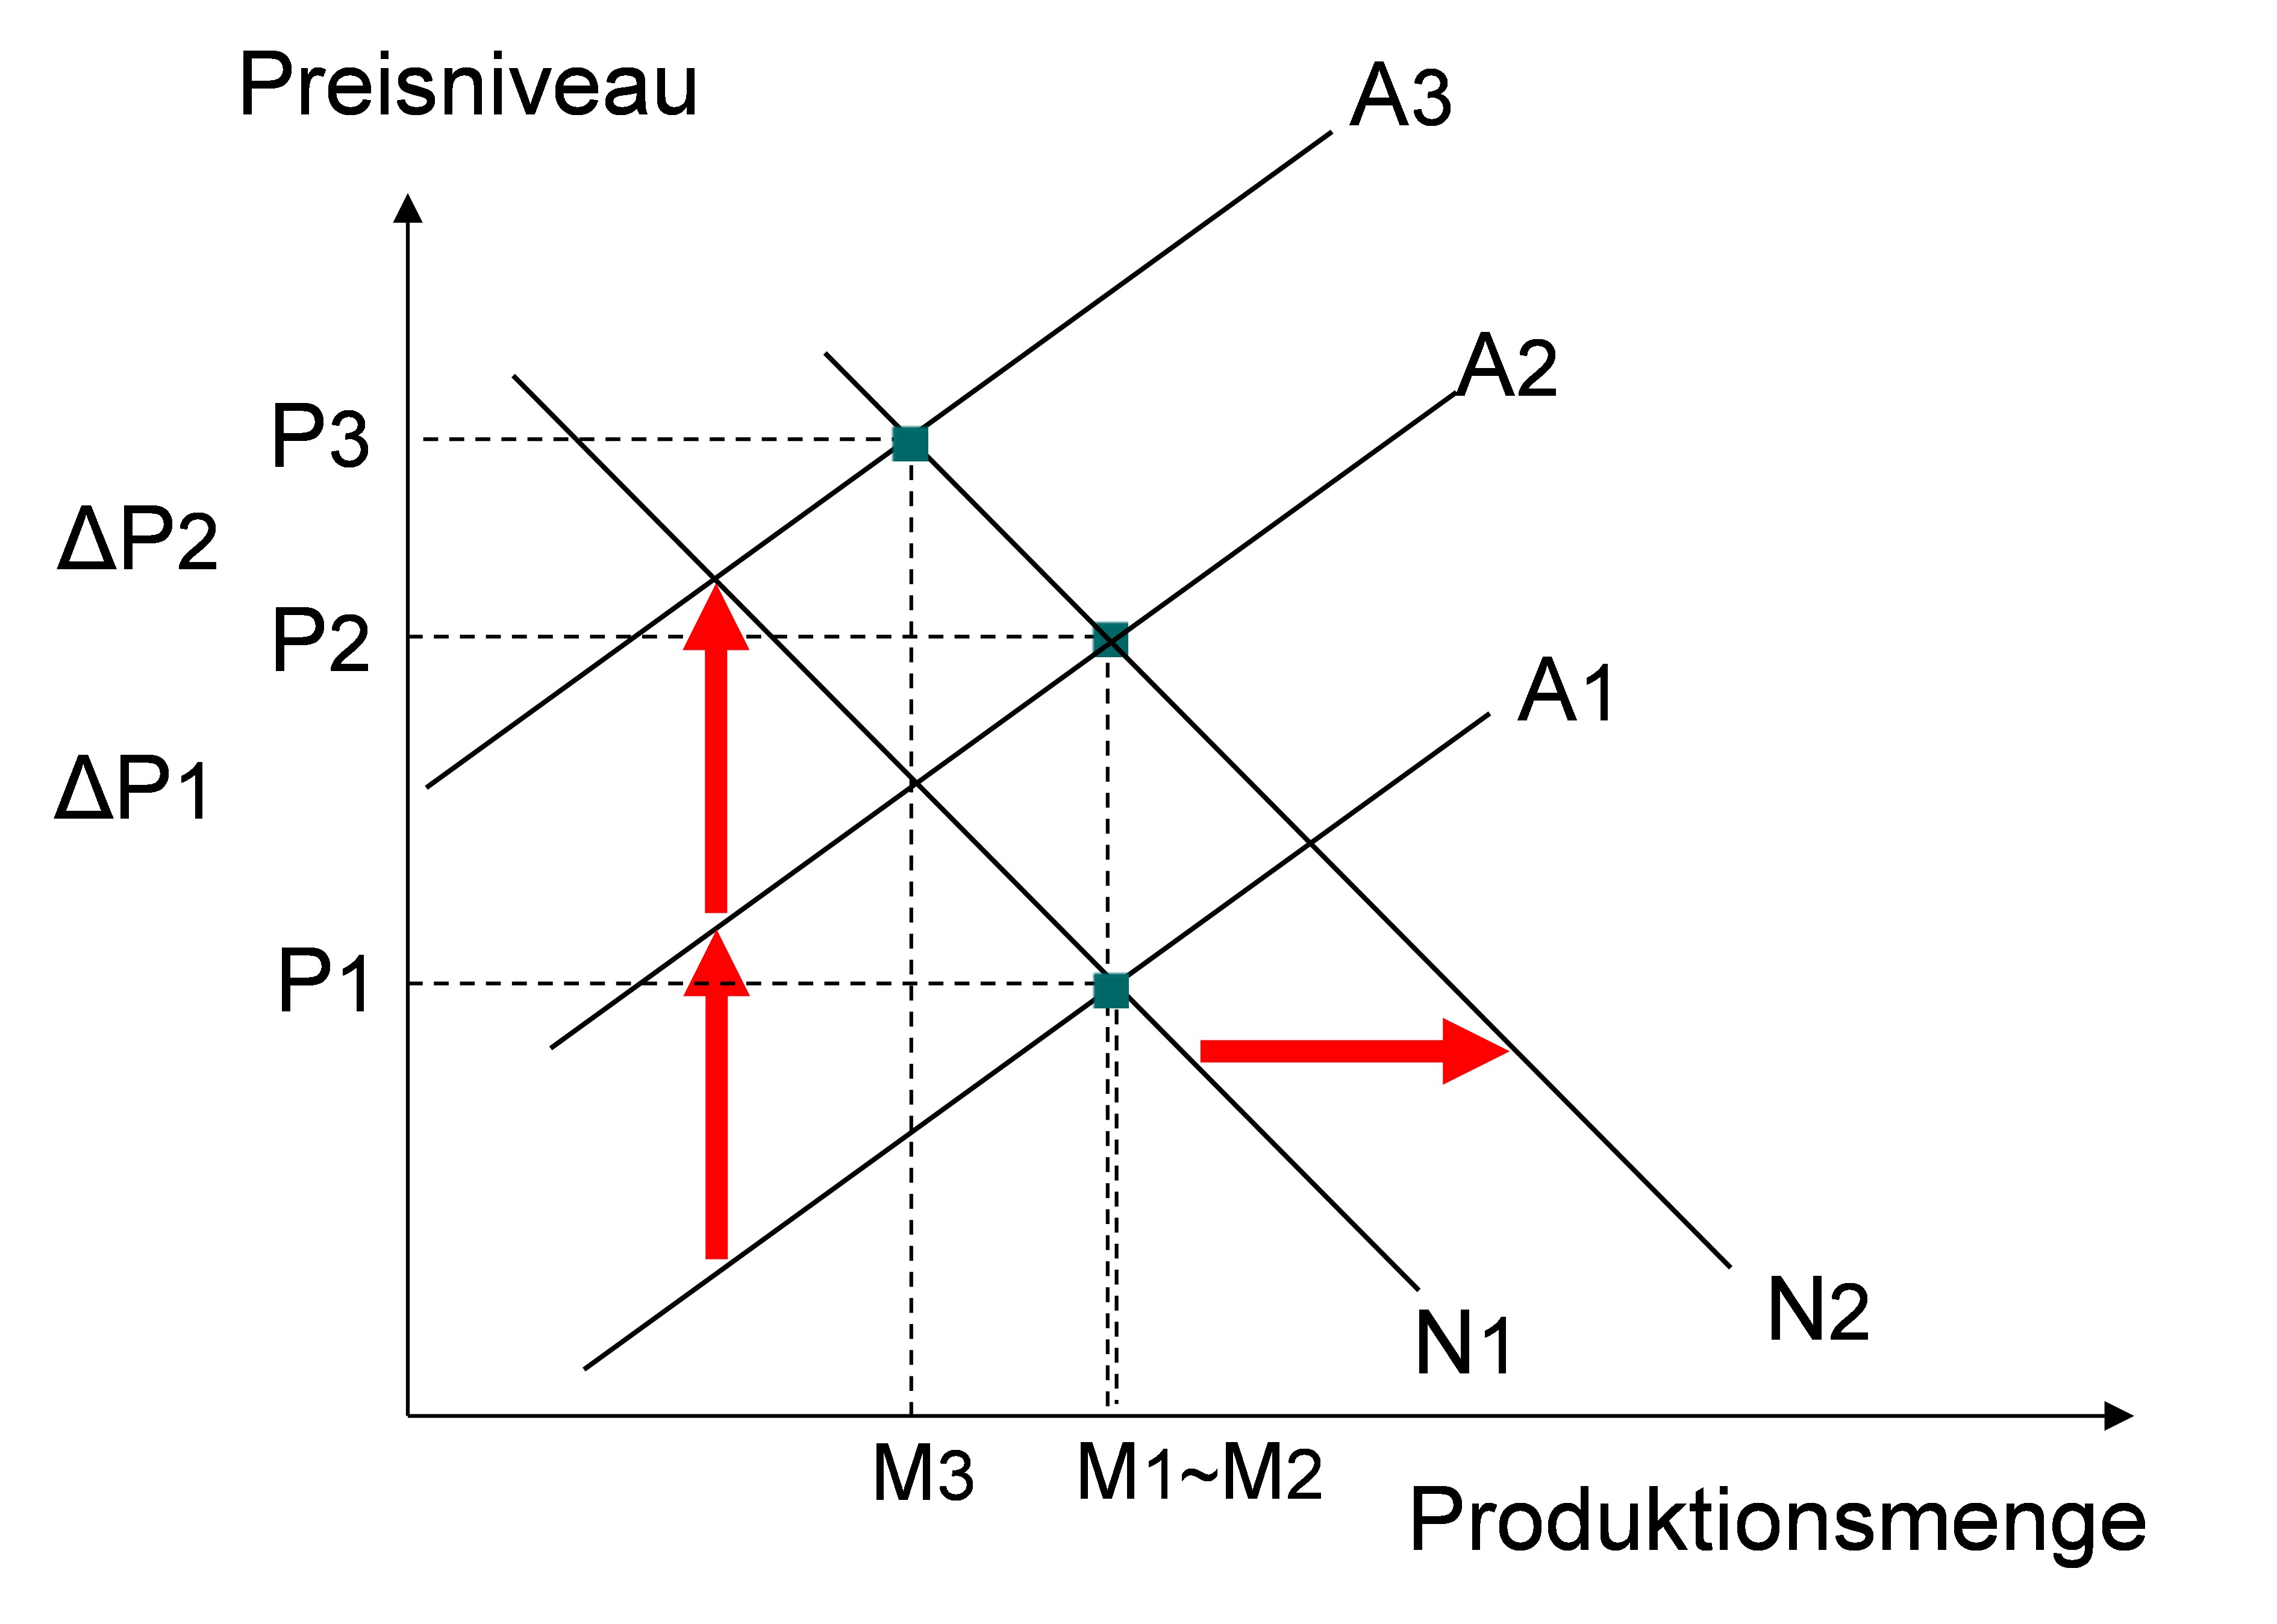 Inflationsgrafik 2 mit Produktionsmenge und Presiniveau 